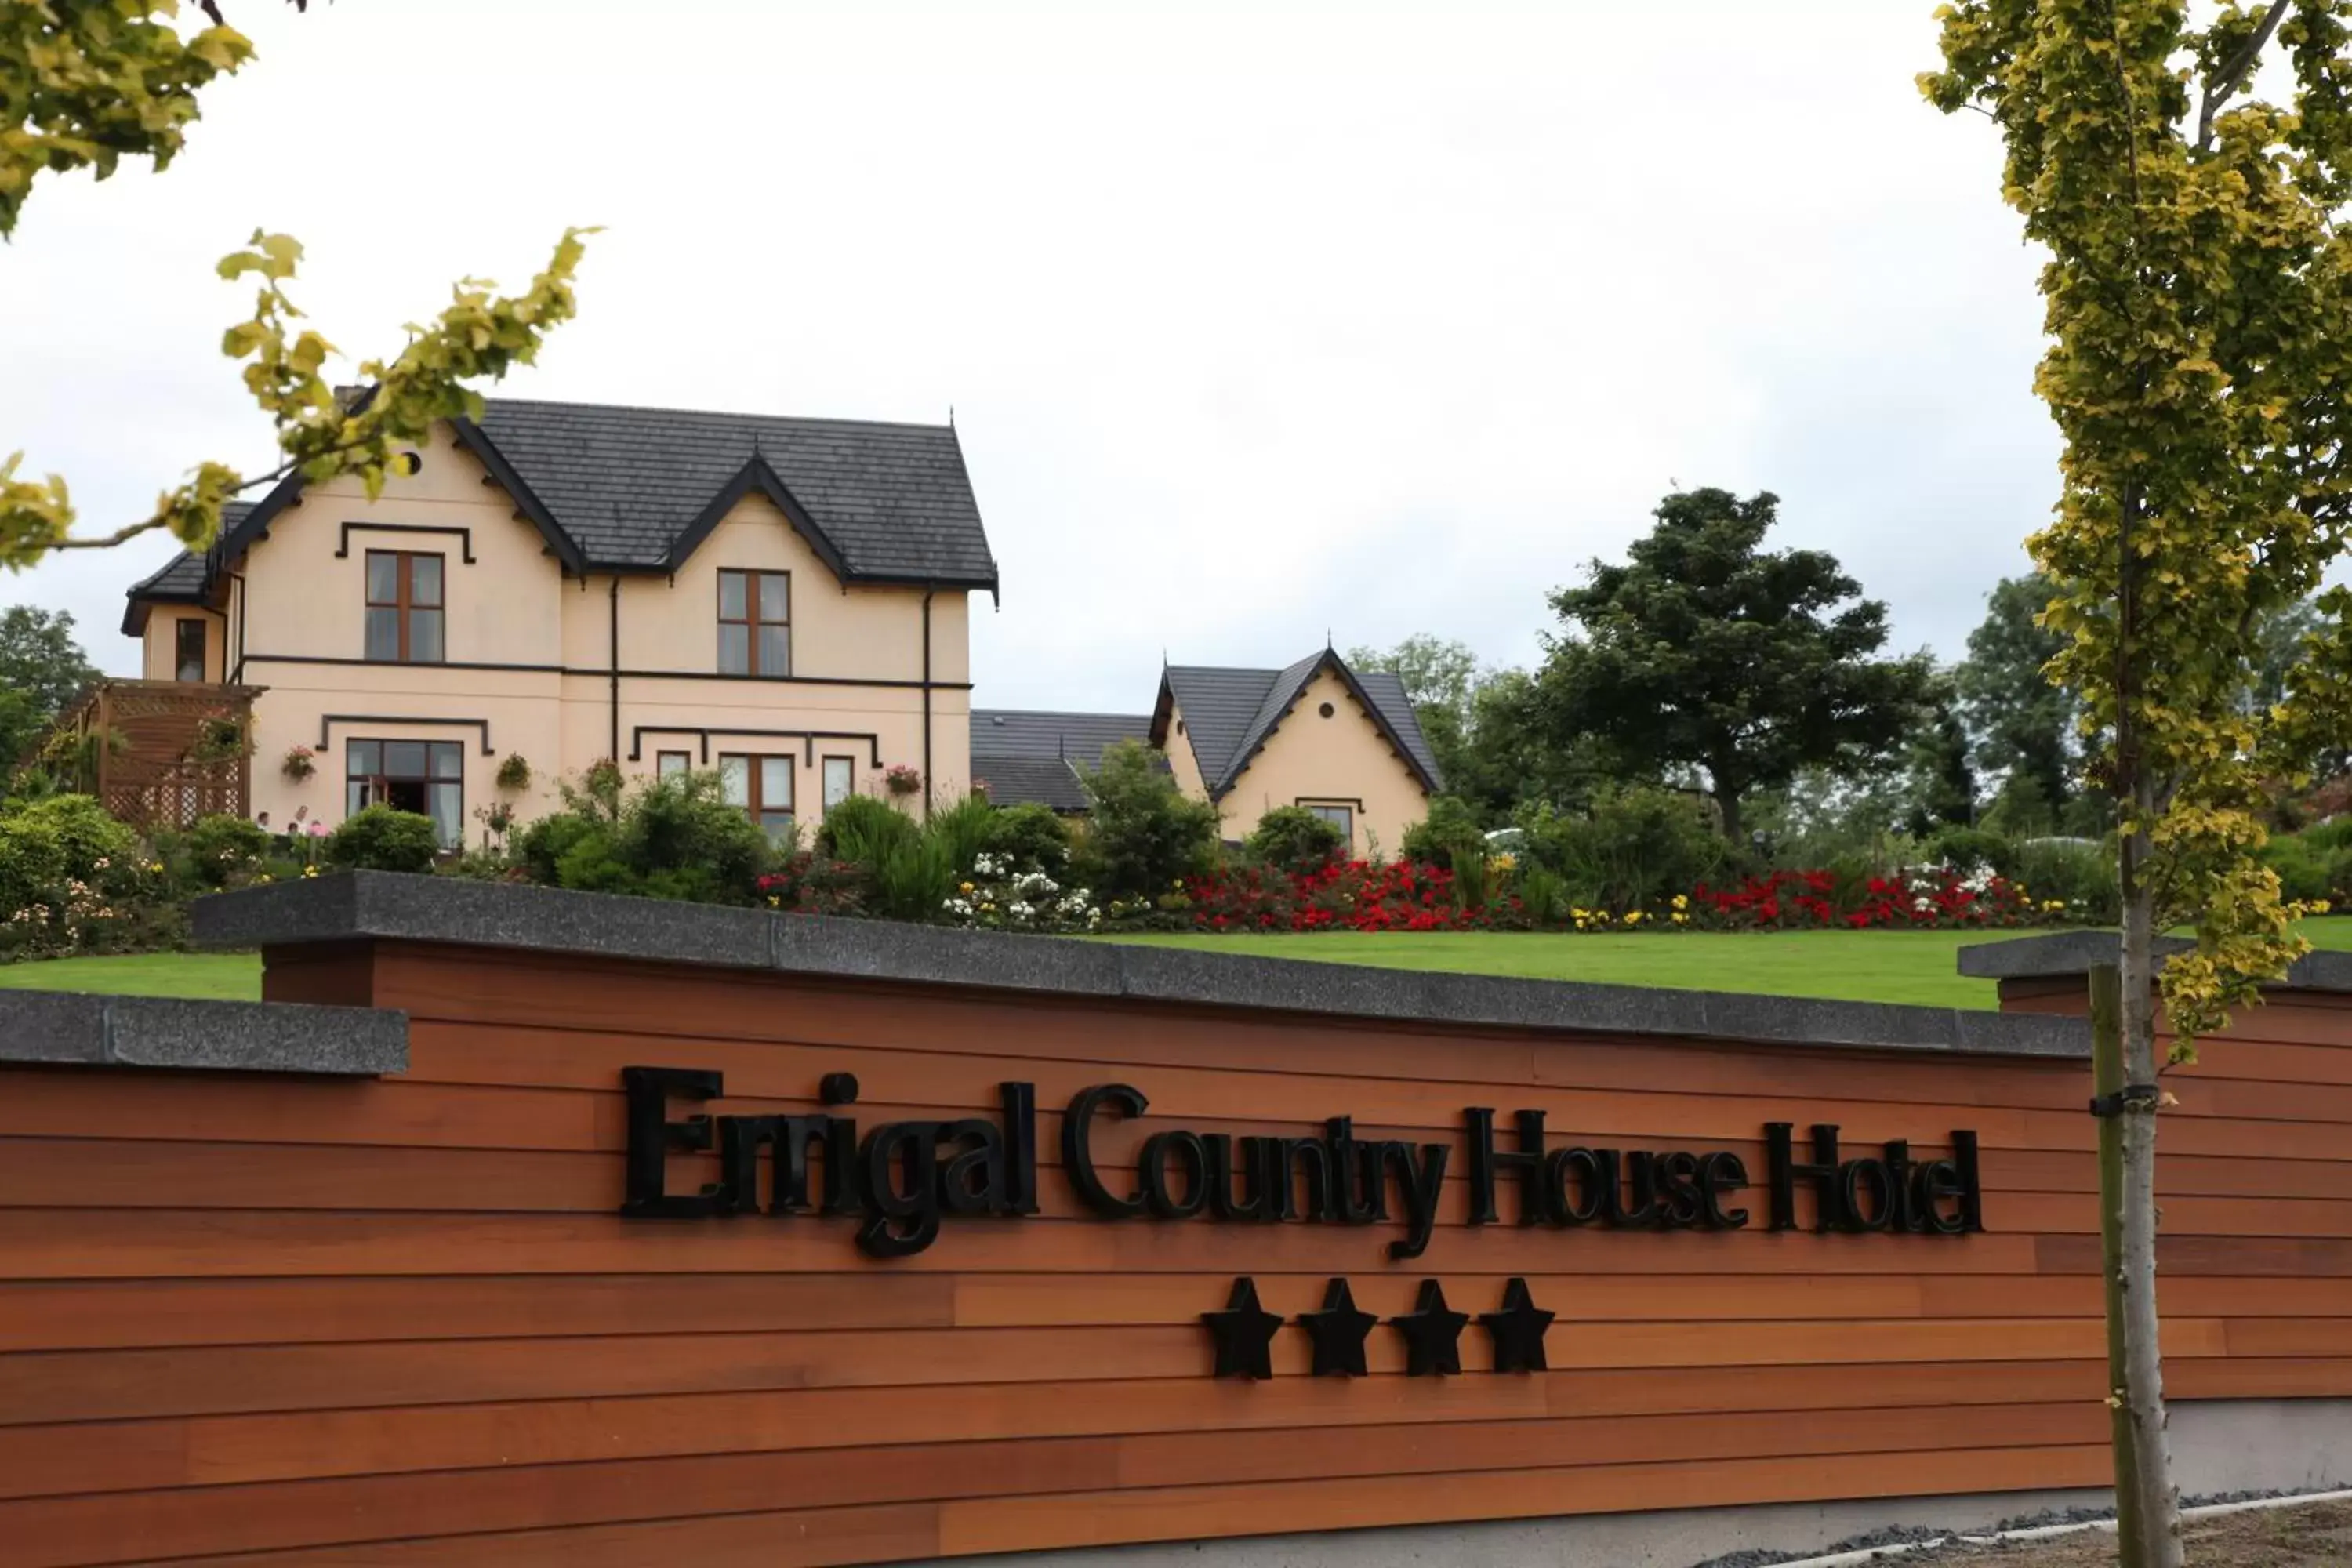 Facade/entrance in Errigal Country House Hotel